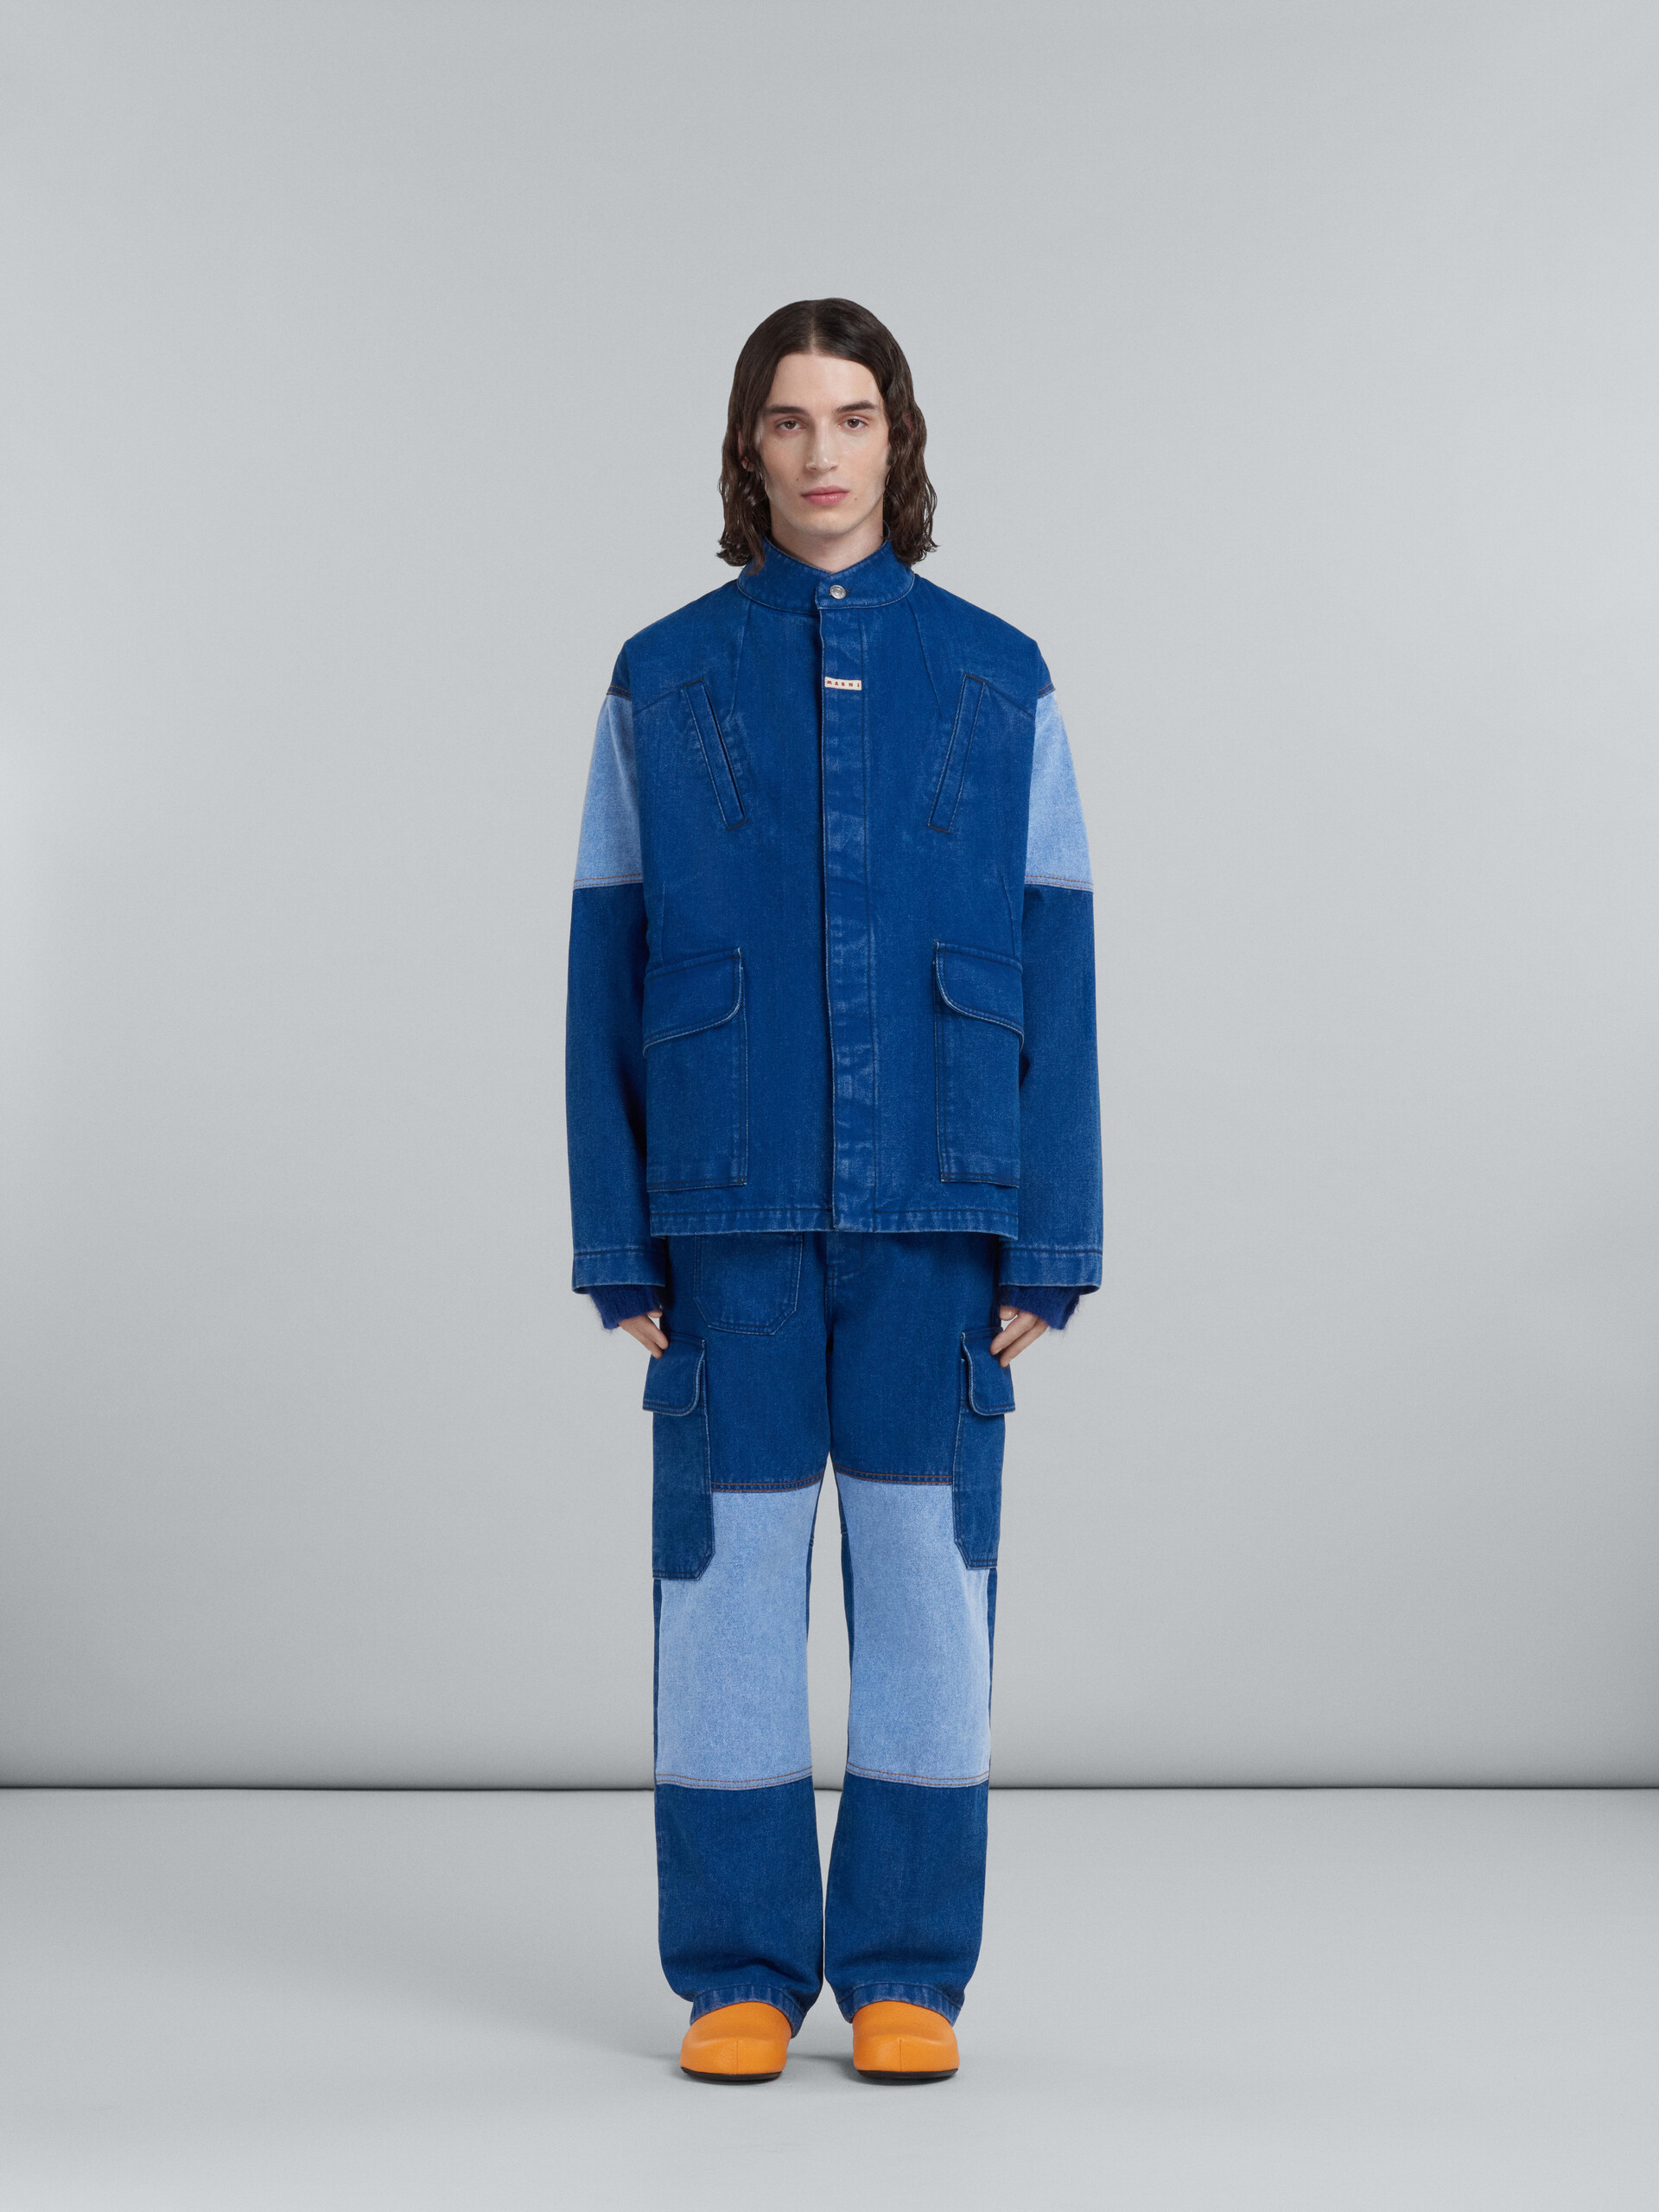 Beschichtete, blaue Jeansjacke - Jacken - Image 2